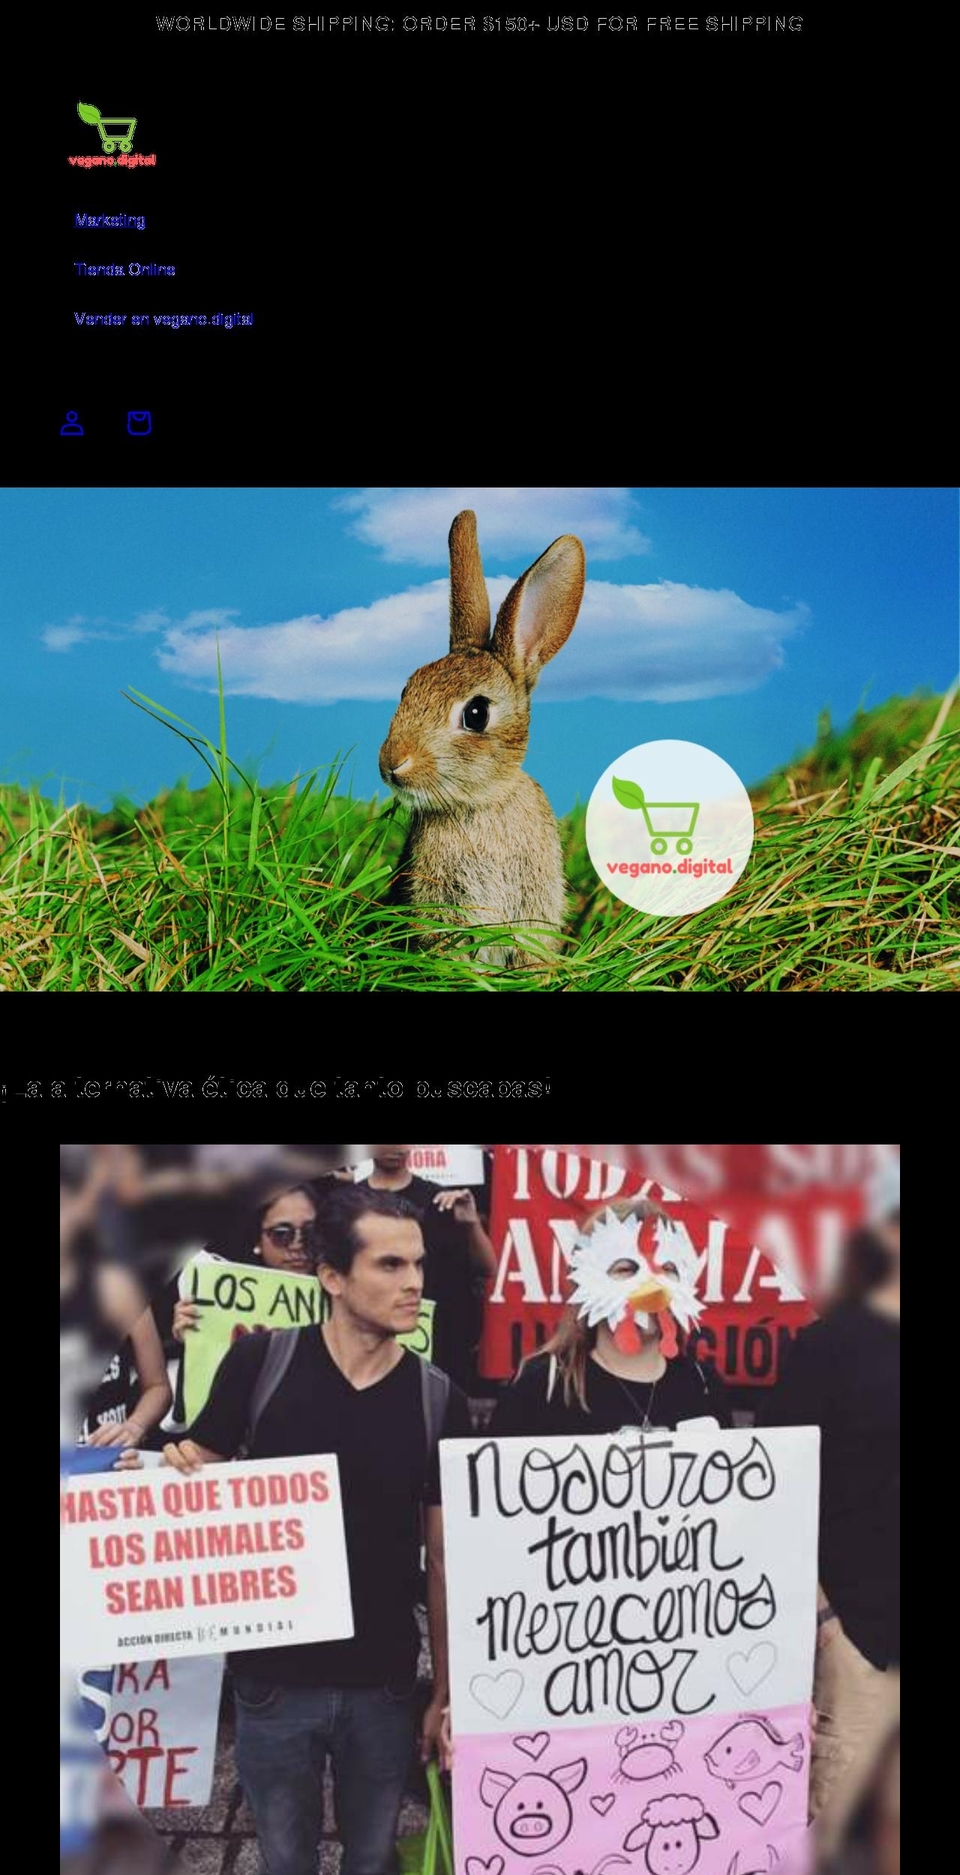 vegano.digital shopify website screenshot